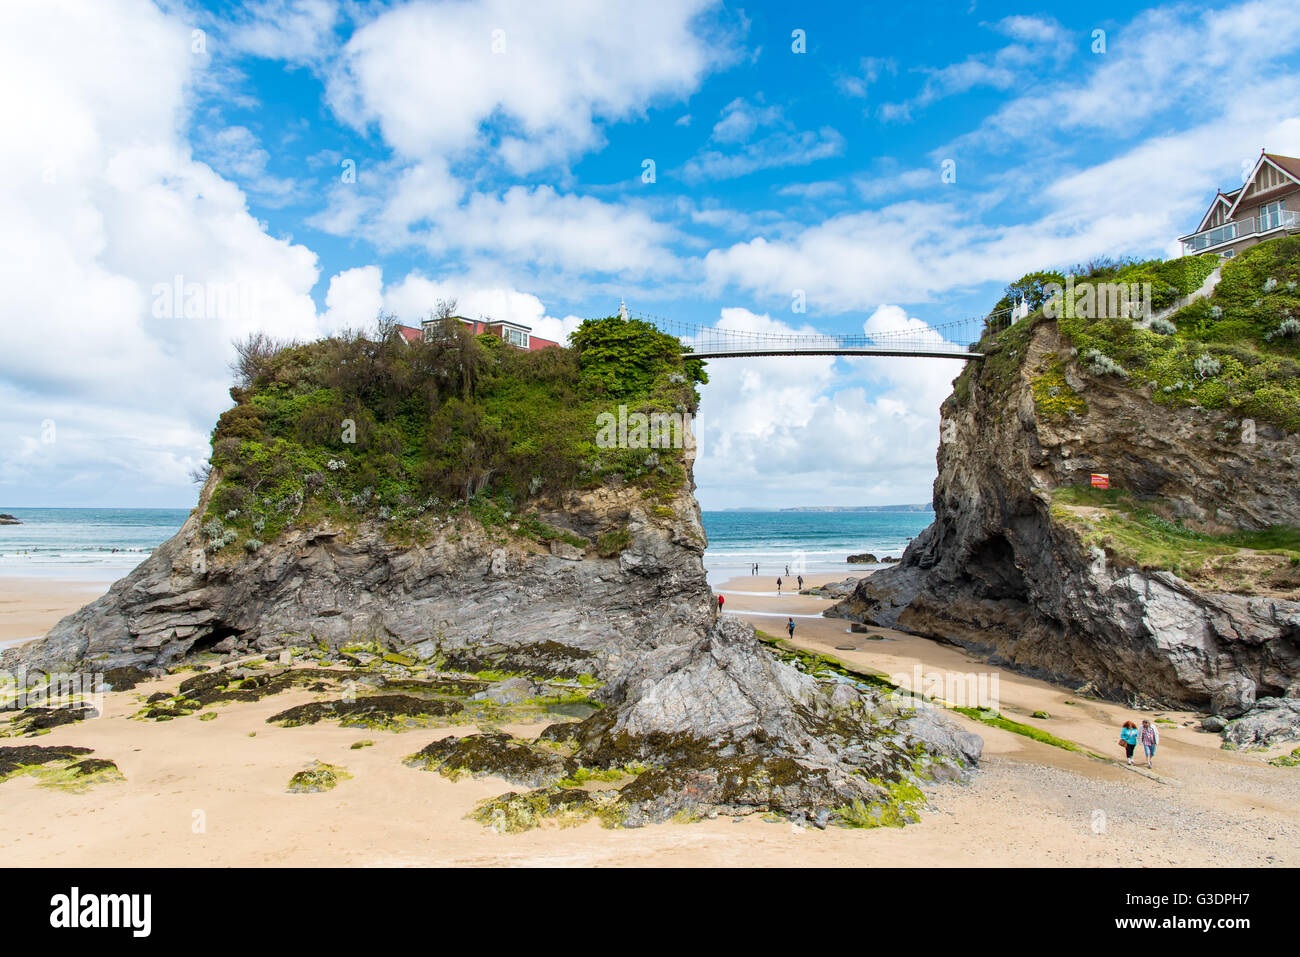 The Island, linked by bridge to the mainland, Towan Beach, Newquay, Cornwall, UK. Stock Photo